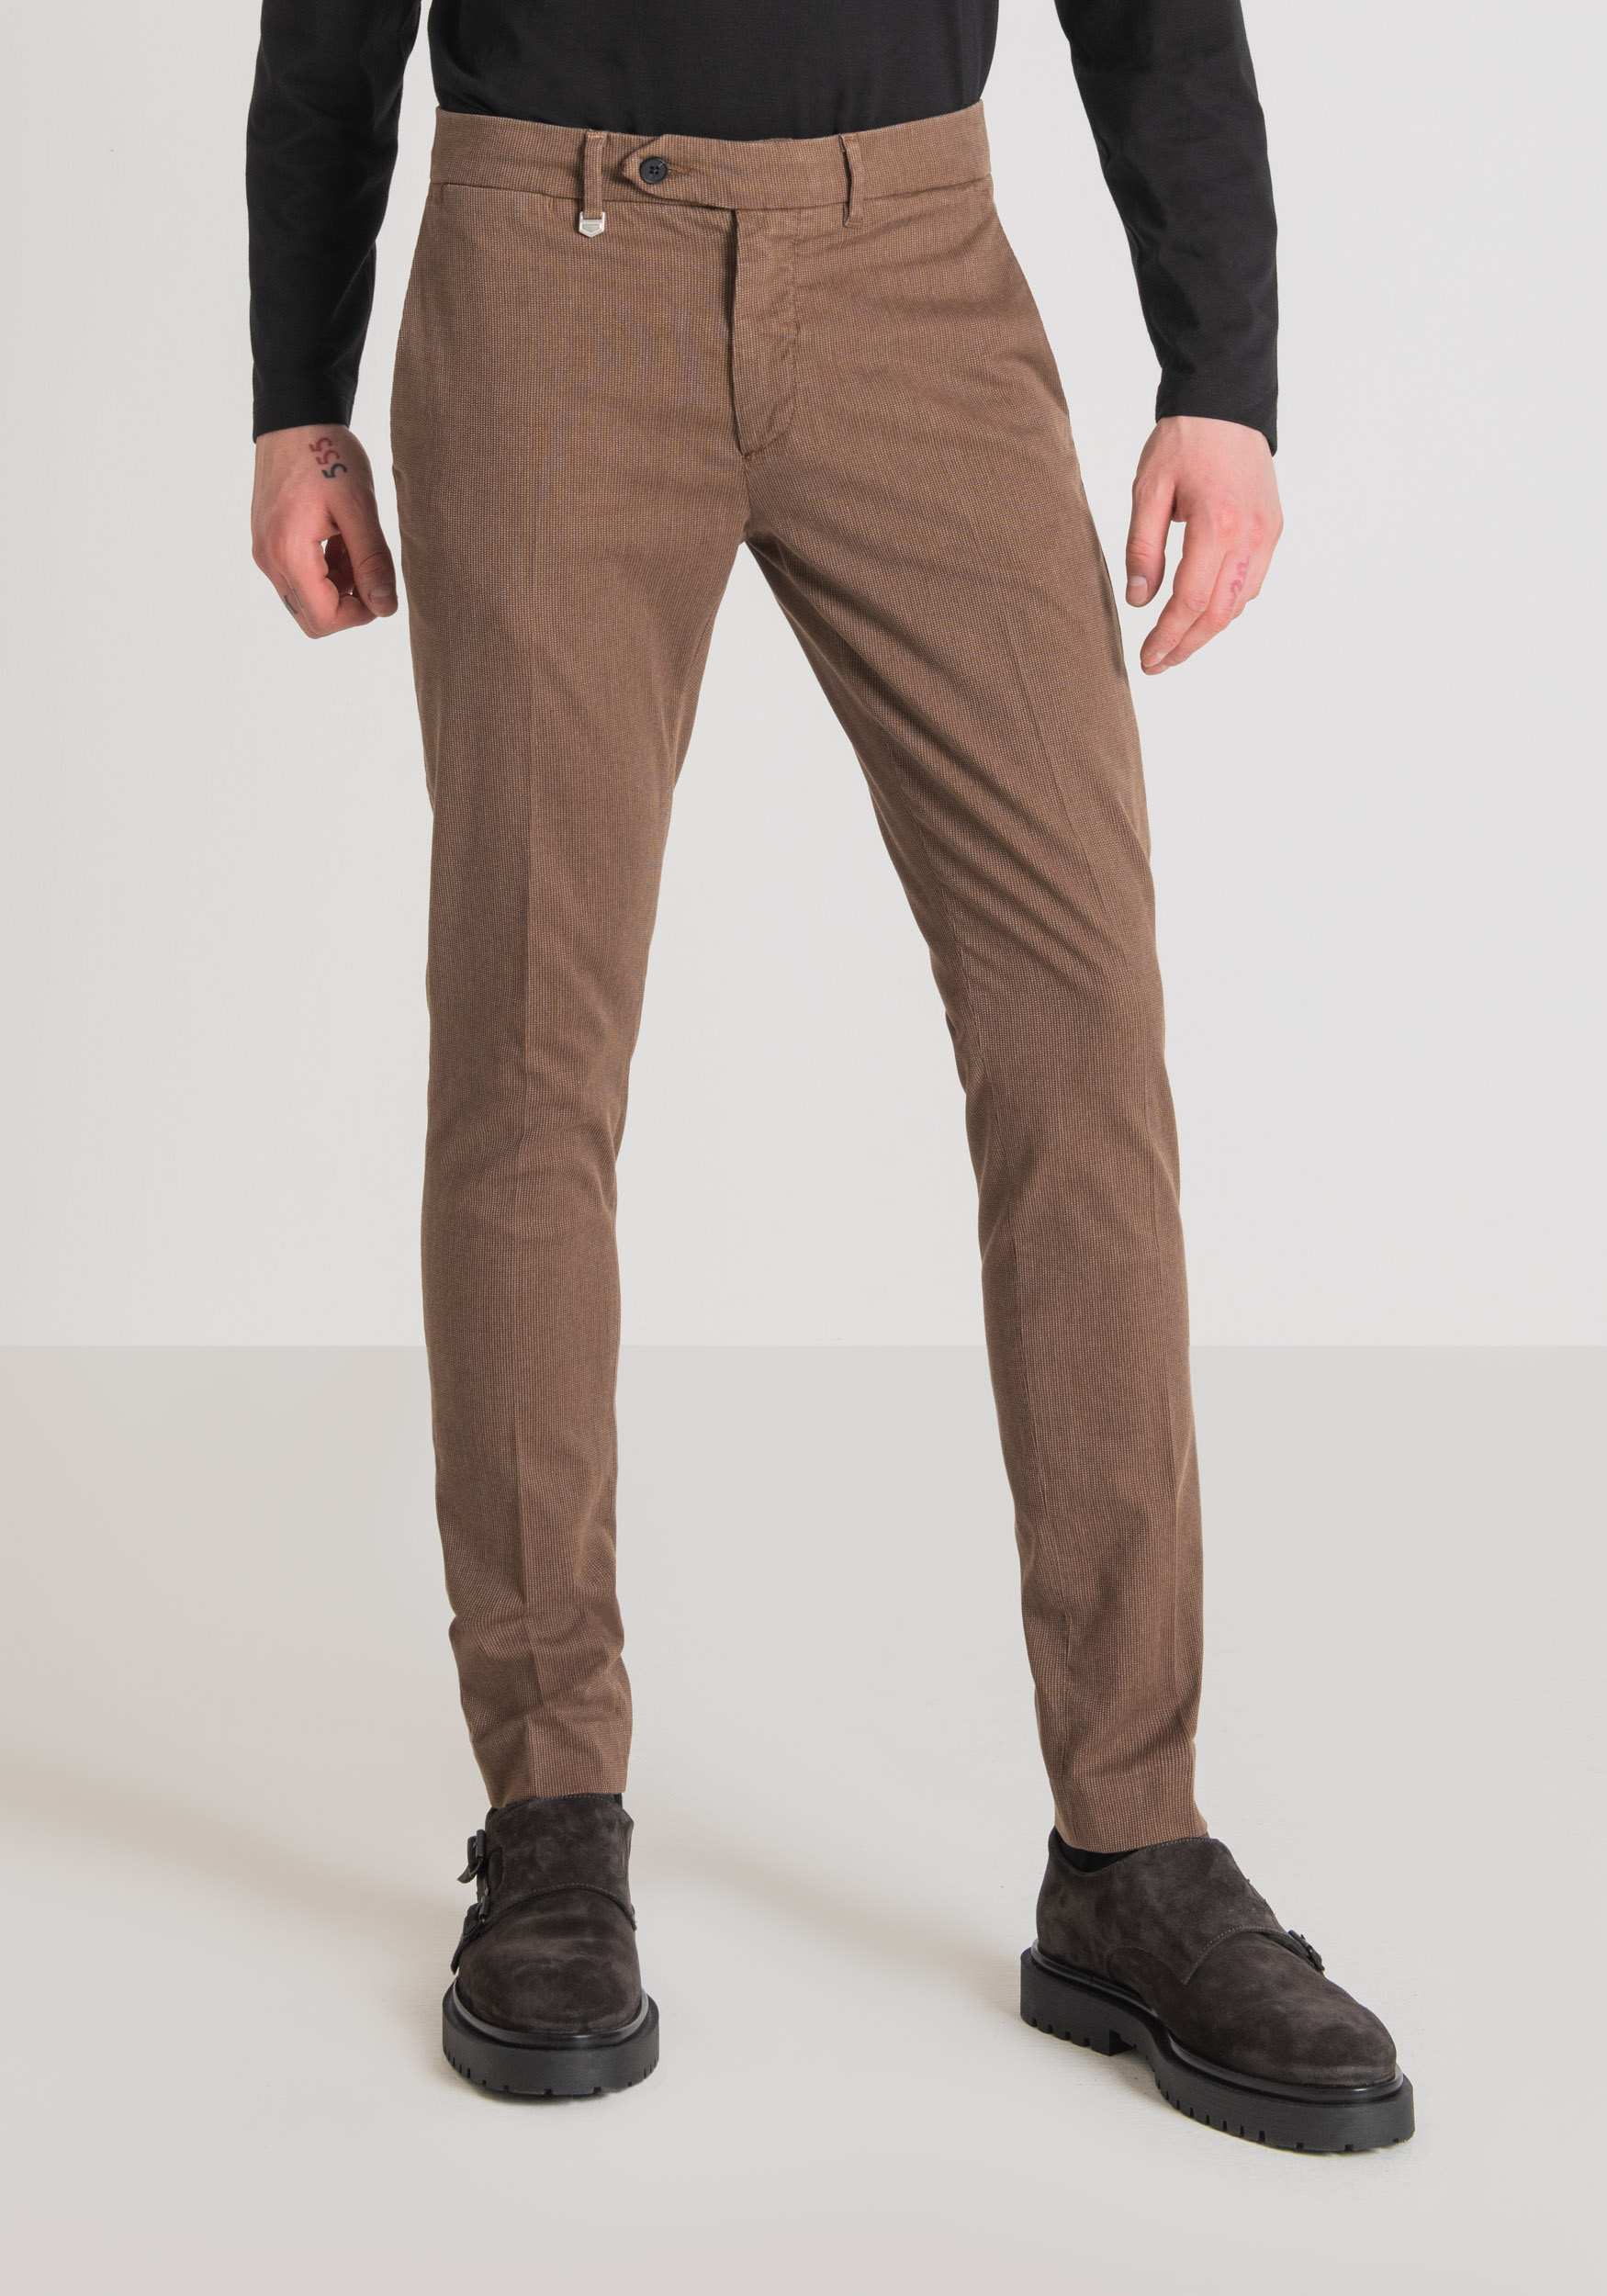 Antony Morato Pantalon Skinny Fit Bryan En Tissu De Coton Melange Elastique Micro-Armure Chameau Fonce | Homme Pantalons